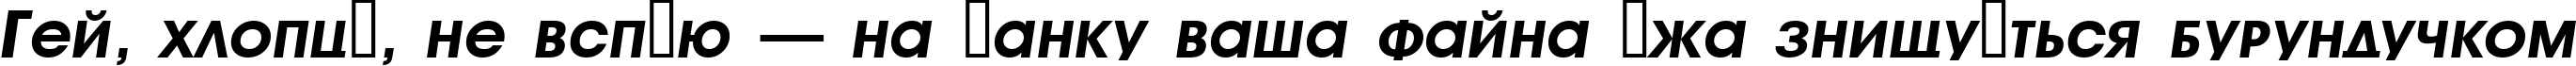 Пример написания шрифтом a_AvanteTitlerCpsLC BoldItalic текста на украинском